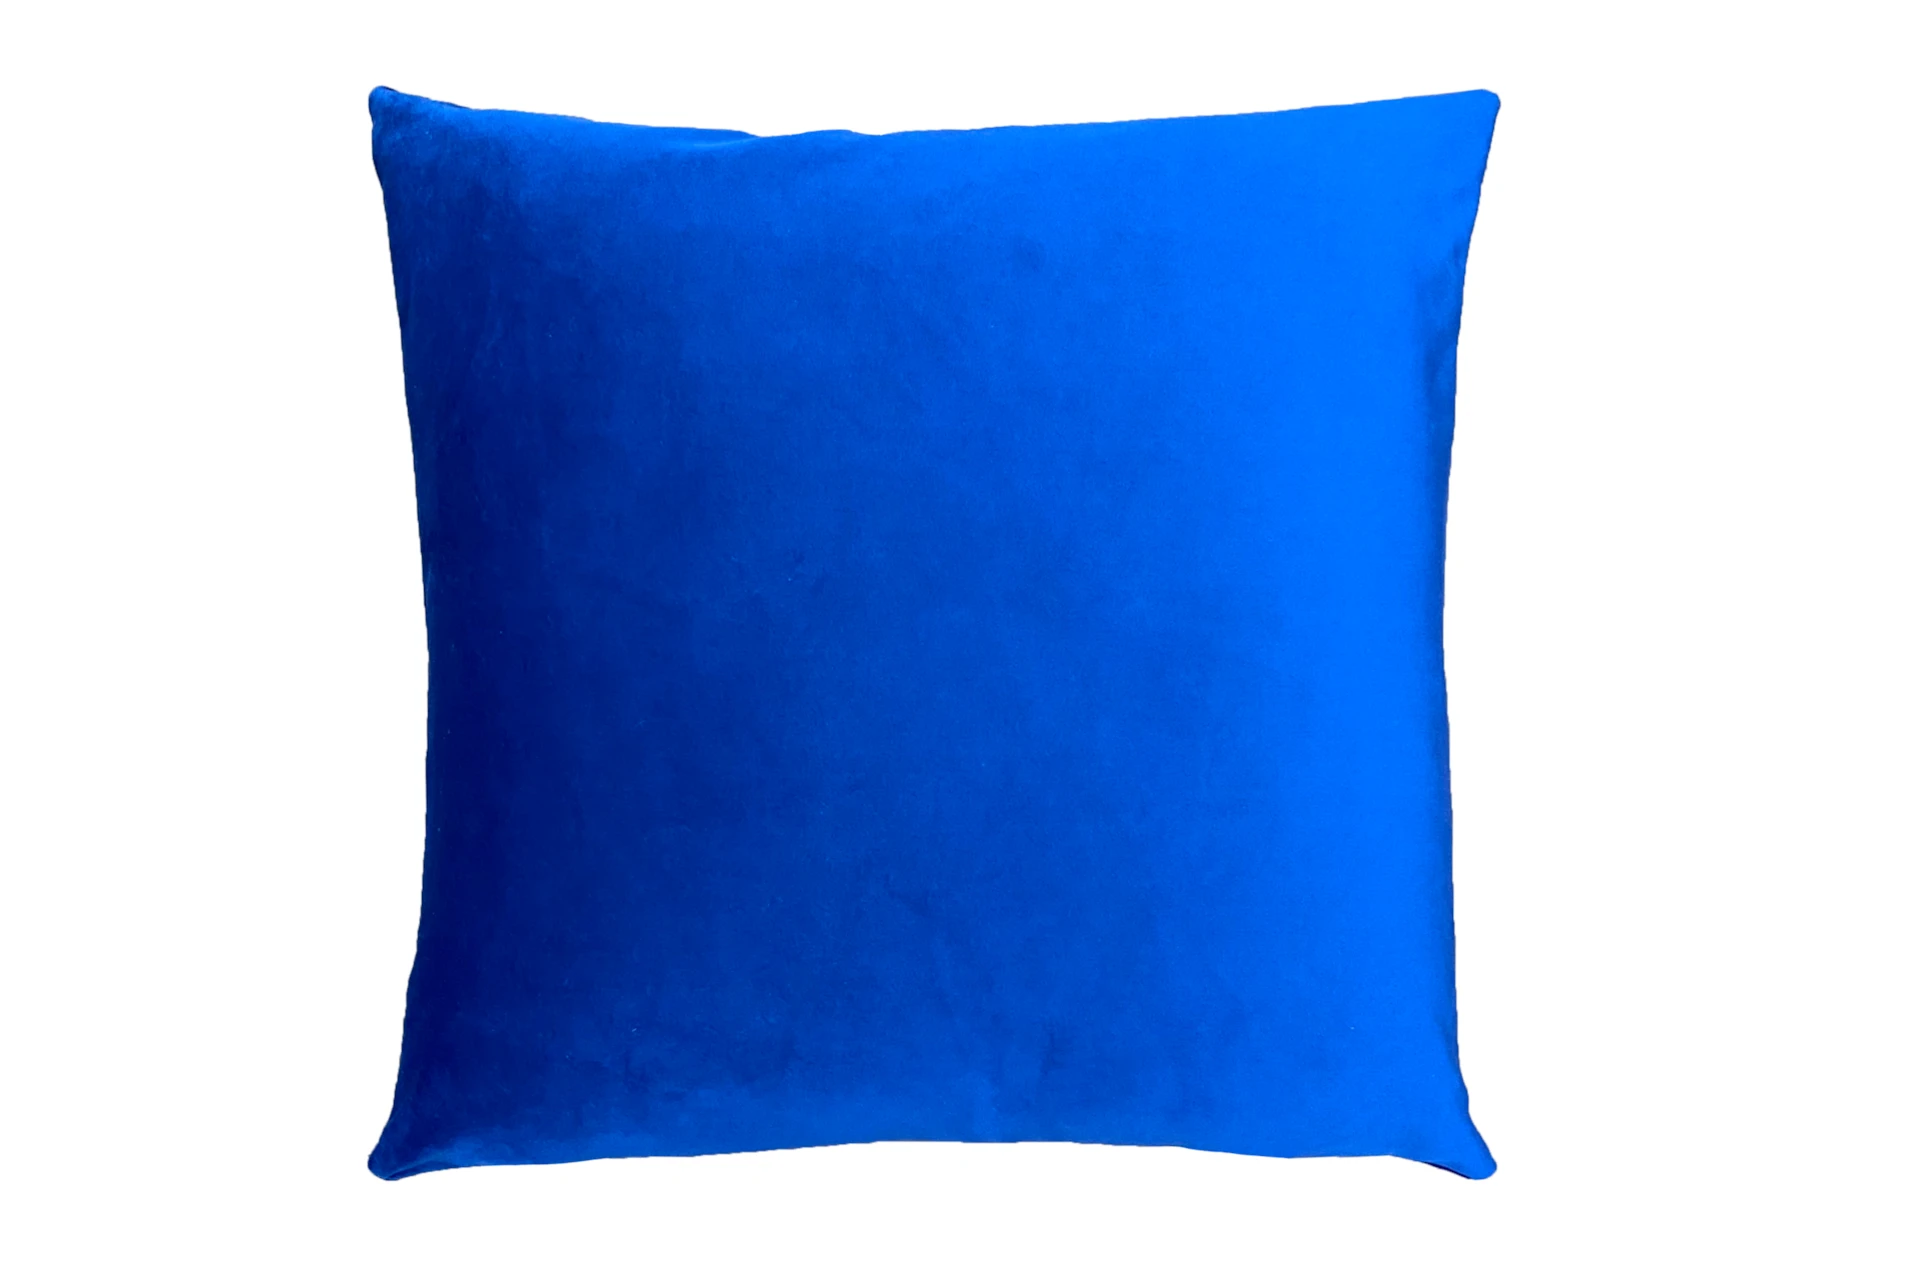 Classic Squares Printing Throw Pillow Case Decorative Light Blue